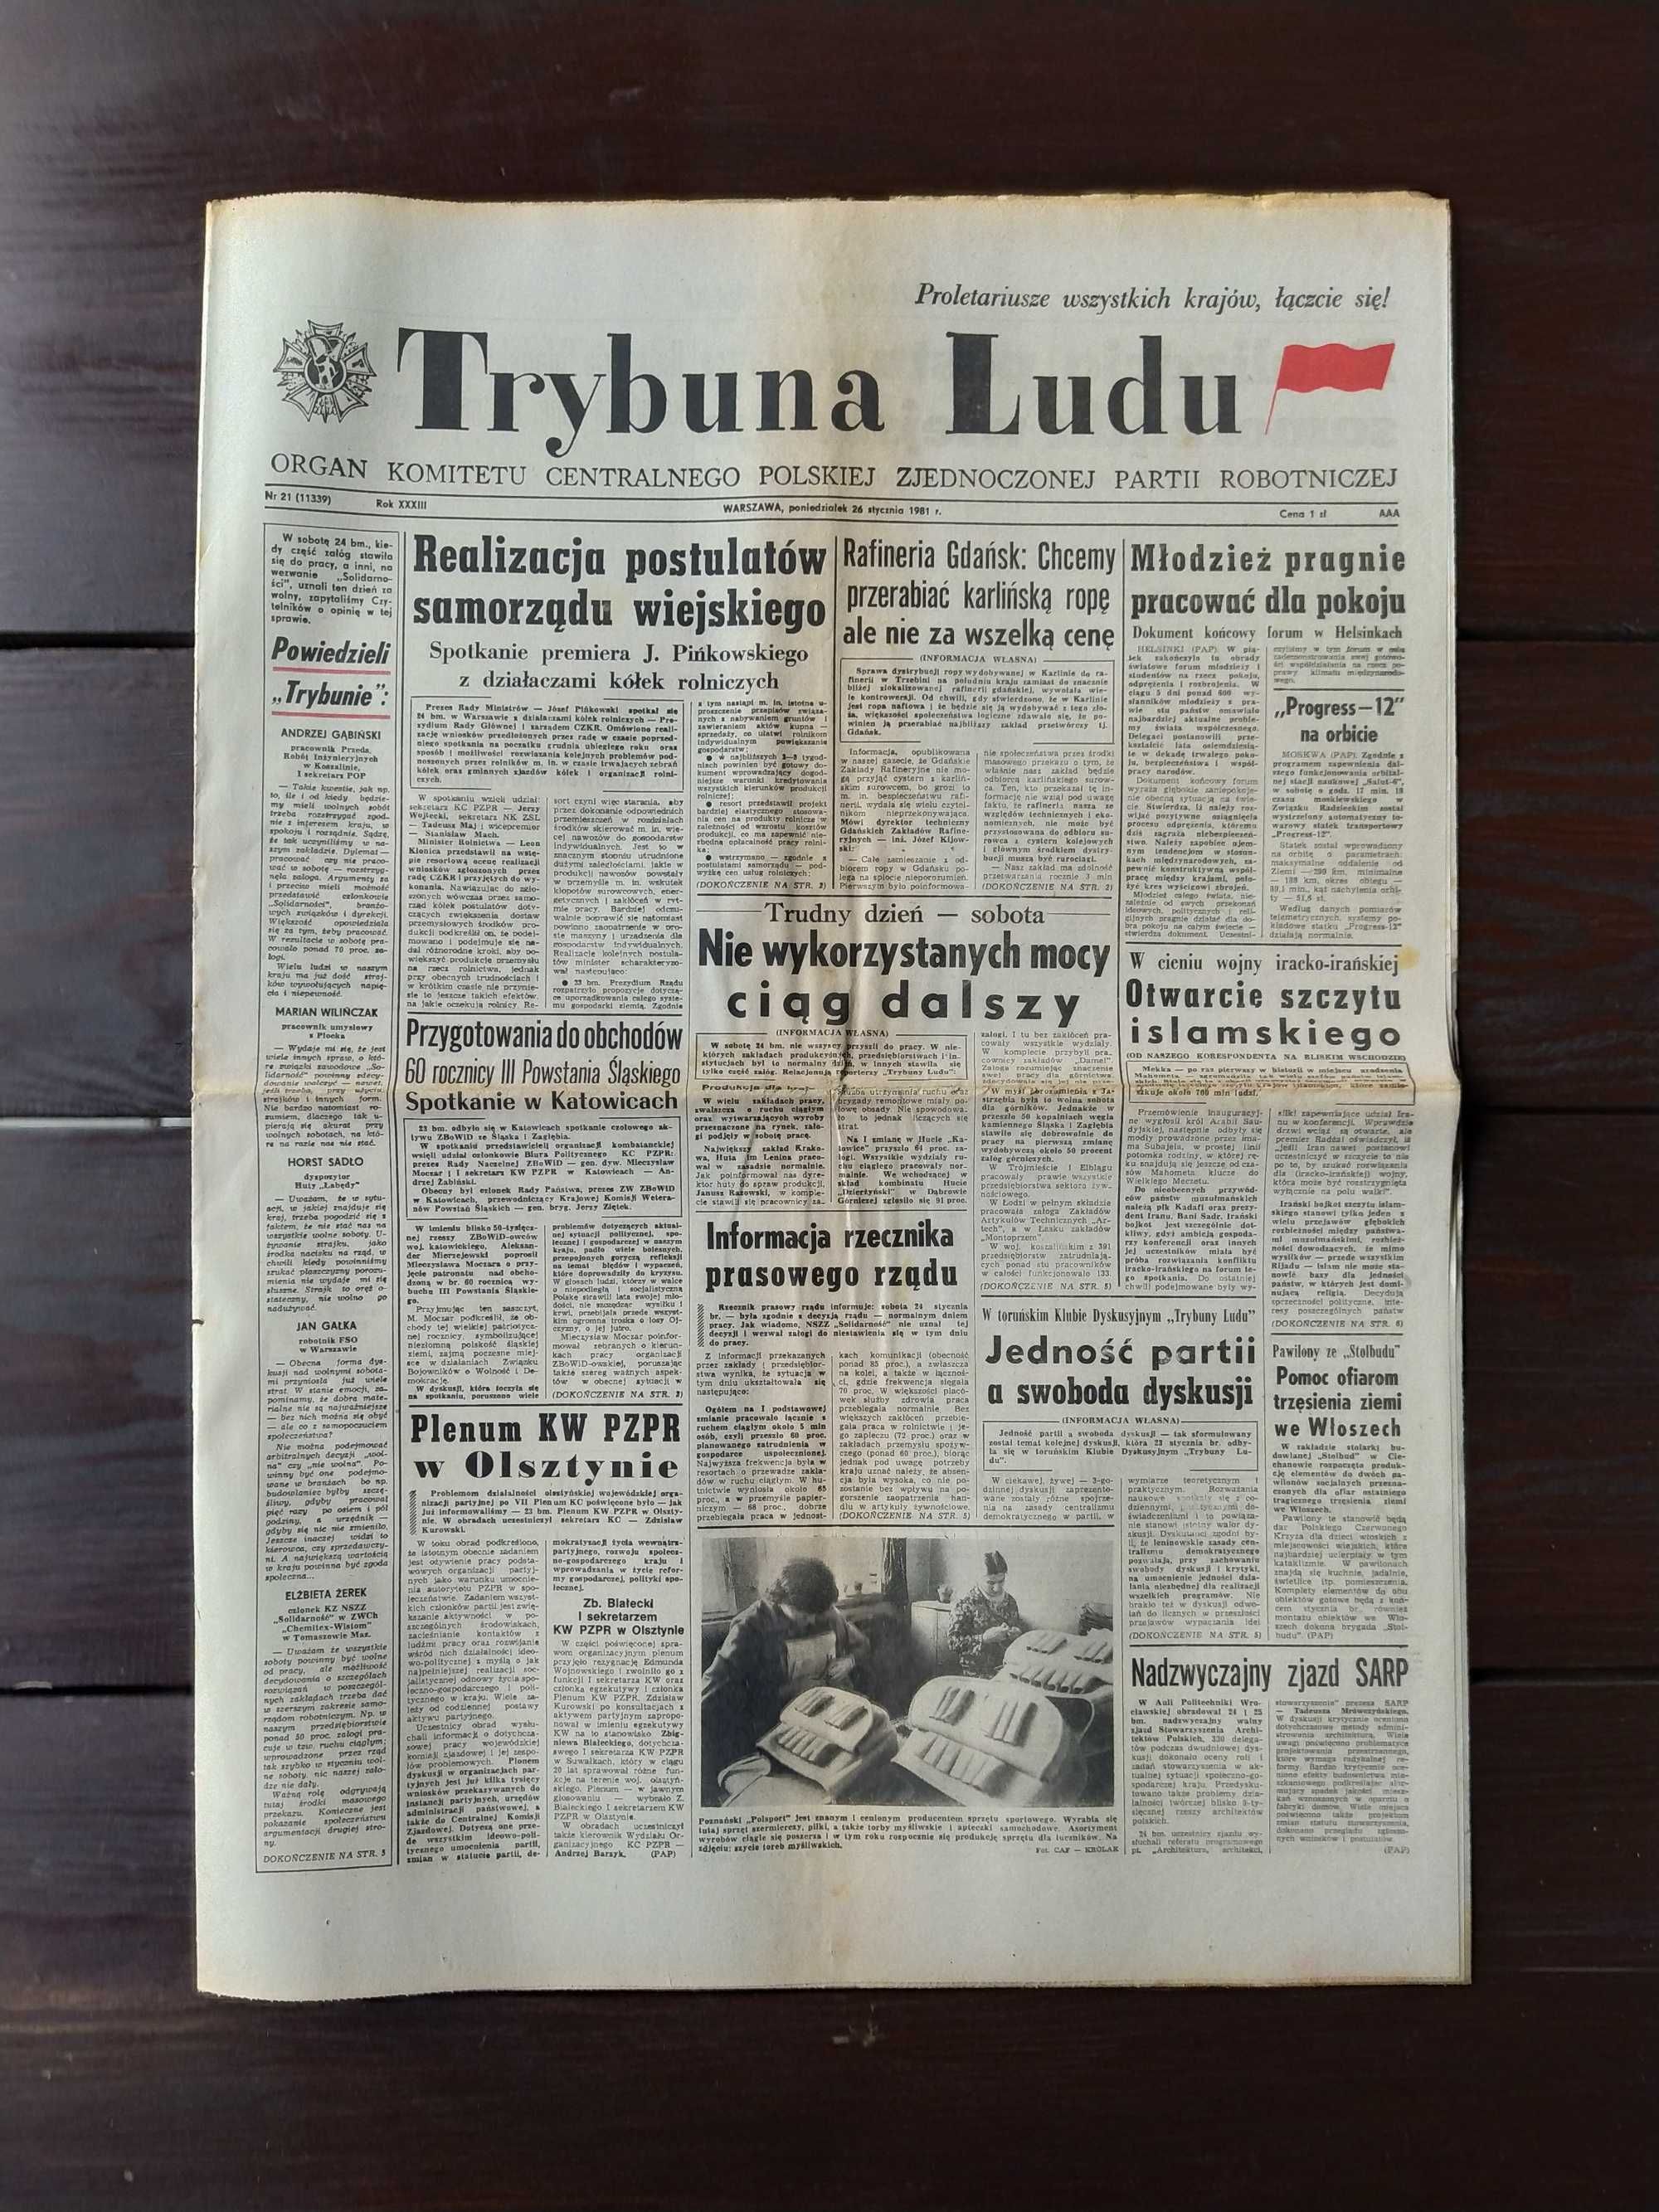 Gazeta TRYBUNA LUDU Nr 21 (11339), 26 I 1981r. PRL